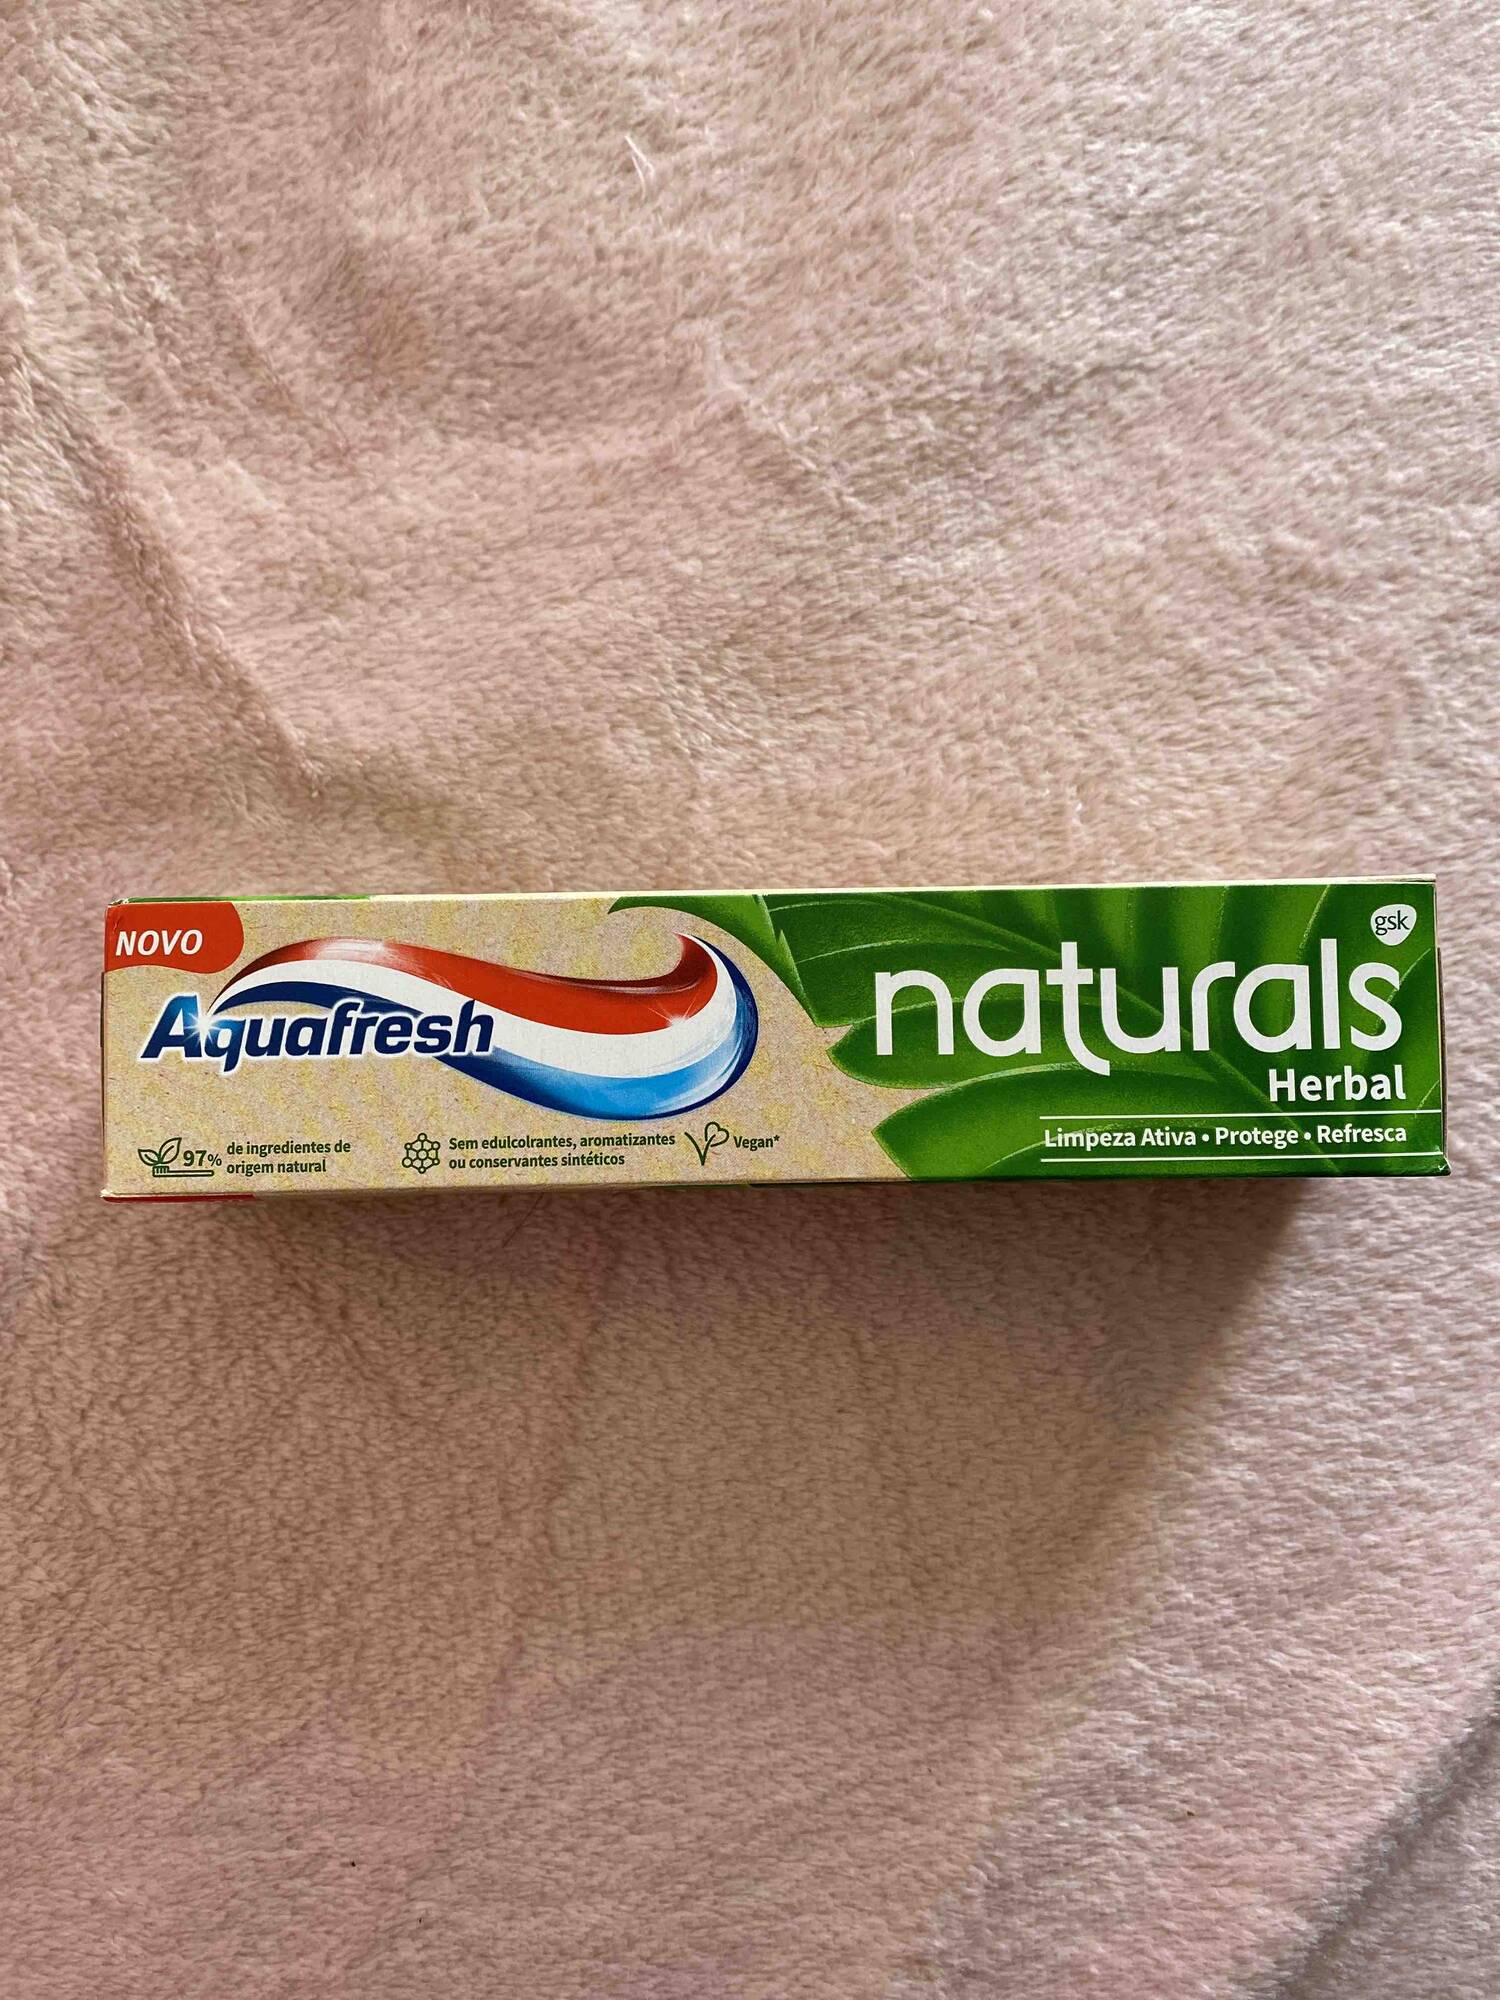 AQUAFRESH - Naturals herbals - Dentifrice au fluor